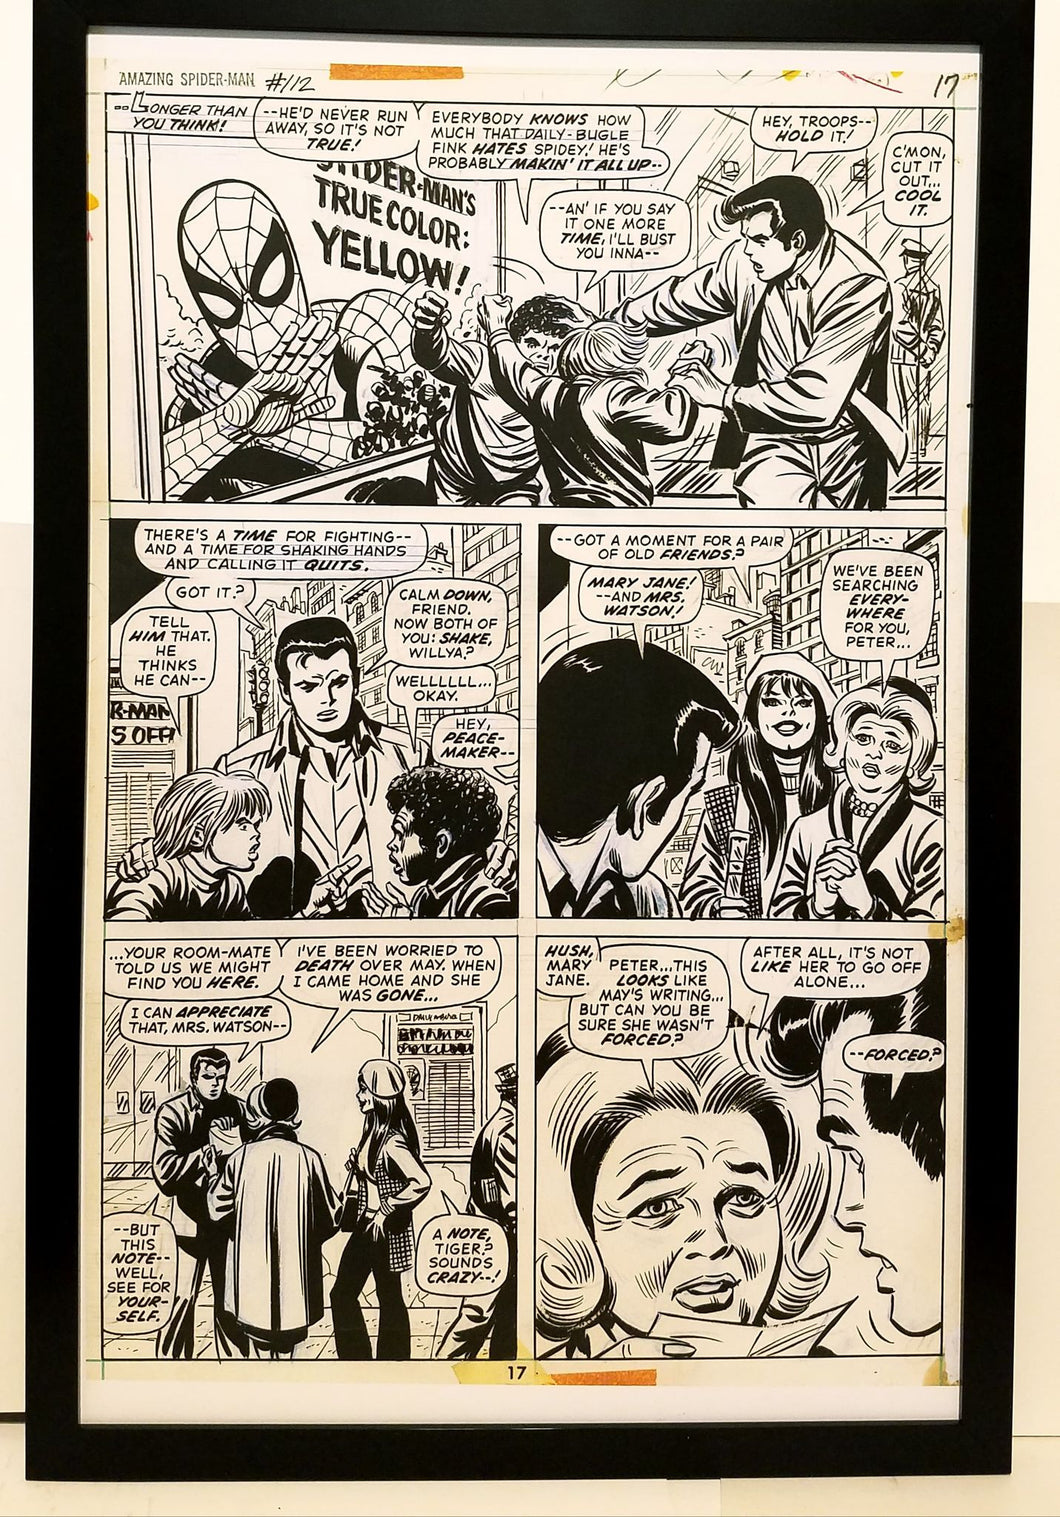 Amazing Spider-Man #112 pg. 17 by John Romita 11x17 FRAMED Original Art Poster Marvel Comics